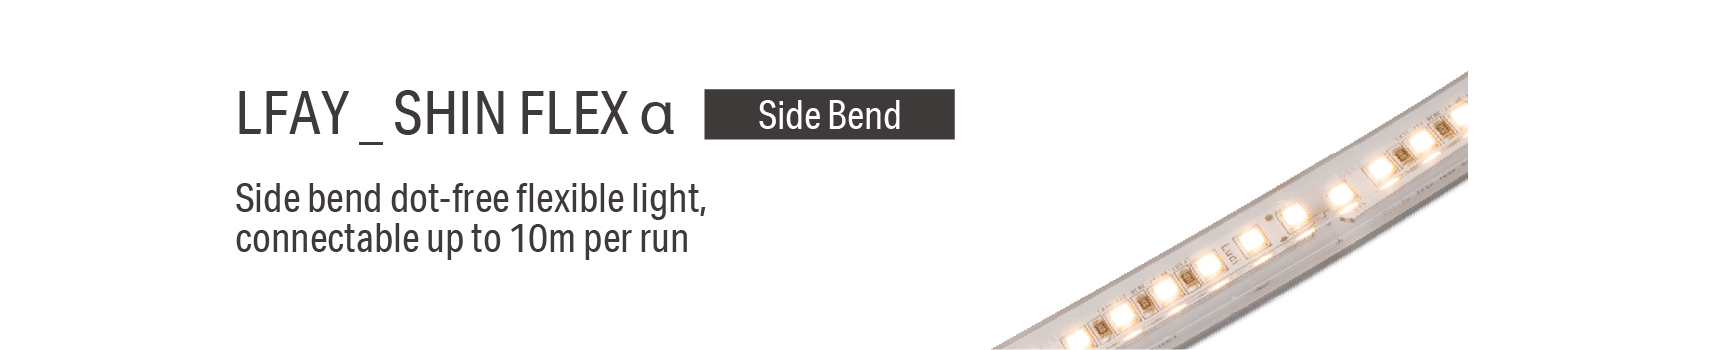 LFAY _ SHIN FLEX α Side bend dot-free flexible light, connectable up to 10m per run